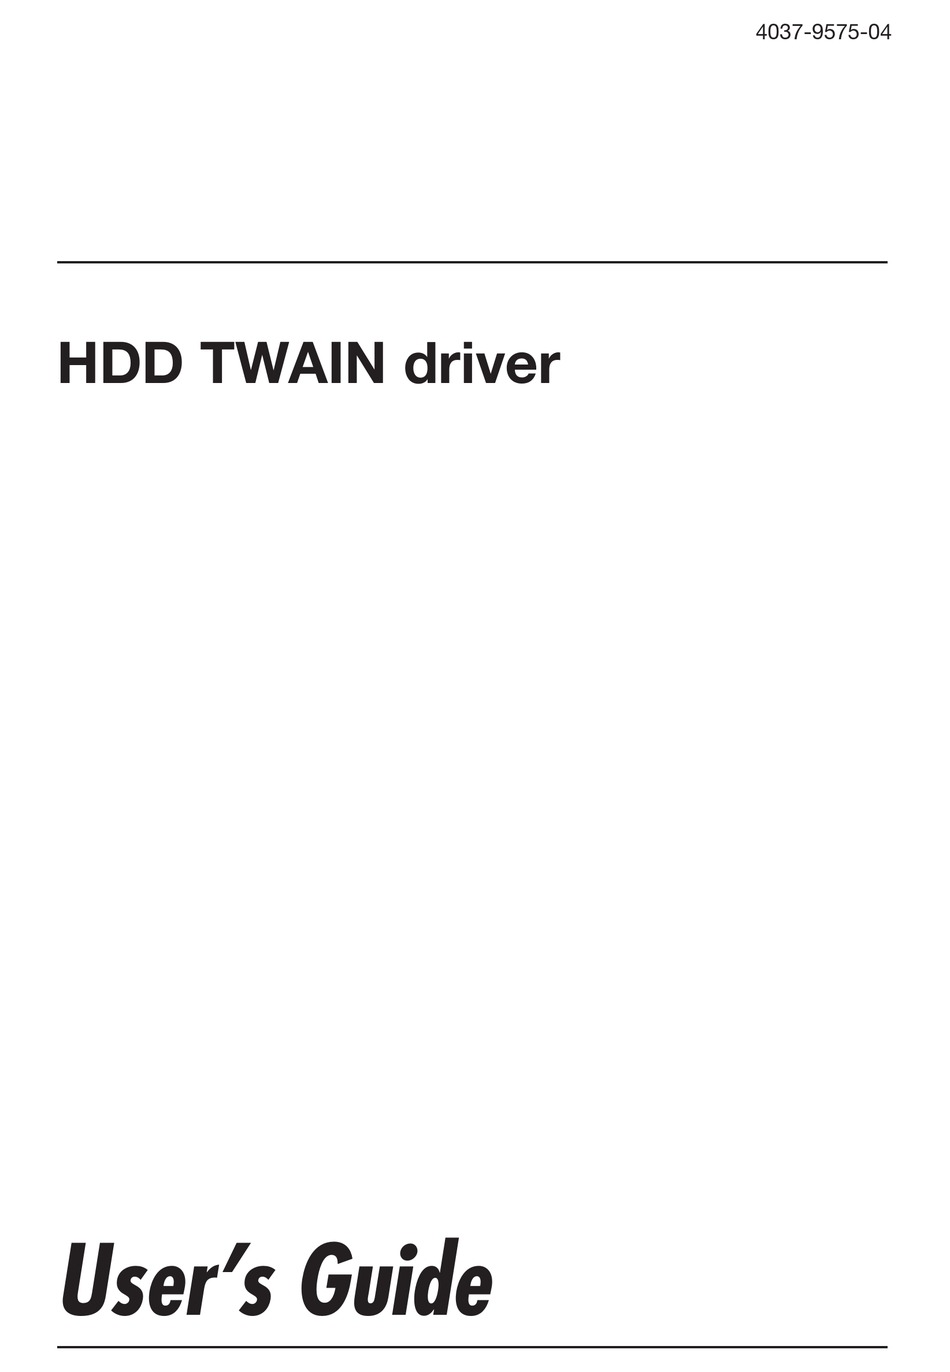 hdd twain driver download